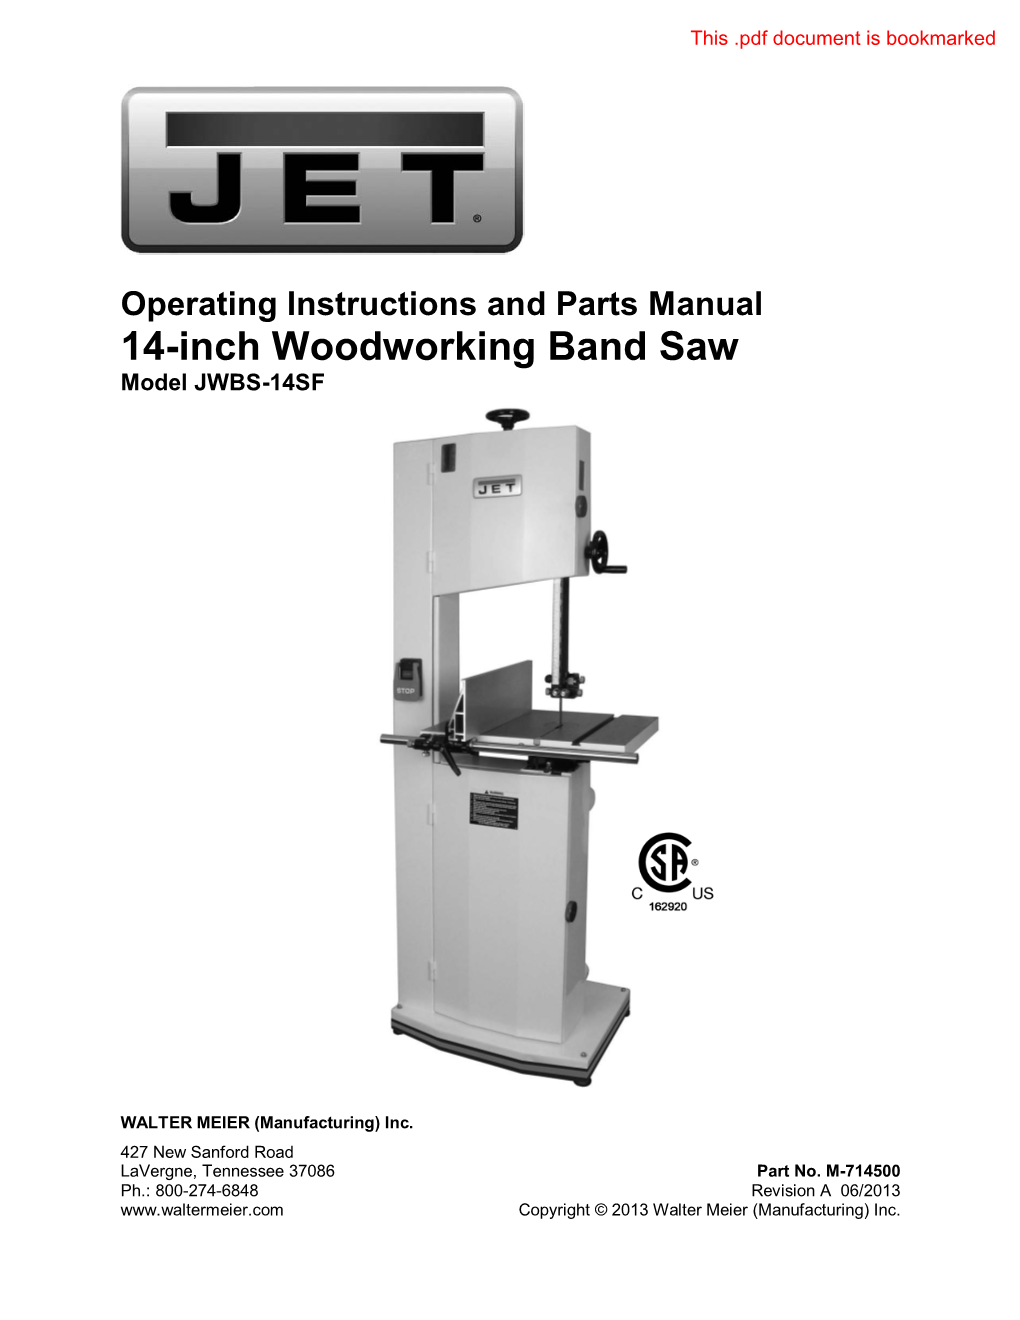 14-Inch Woodworking Band Saw Model JWBS-14SF